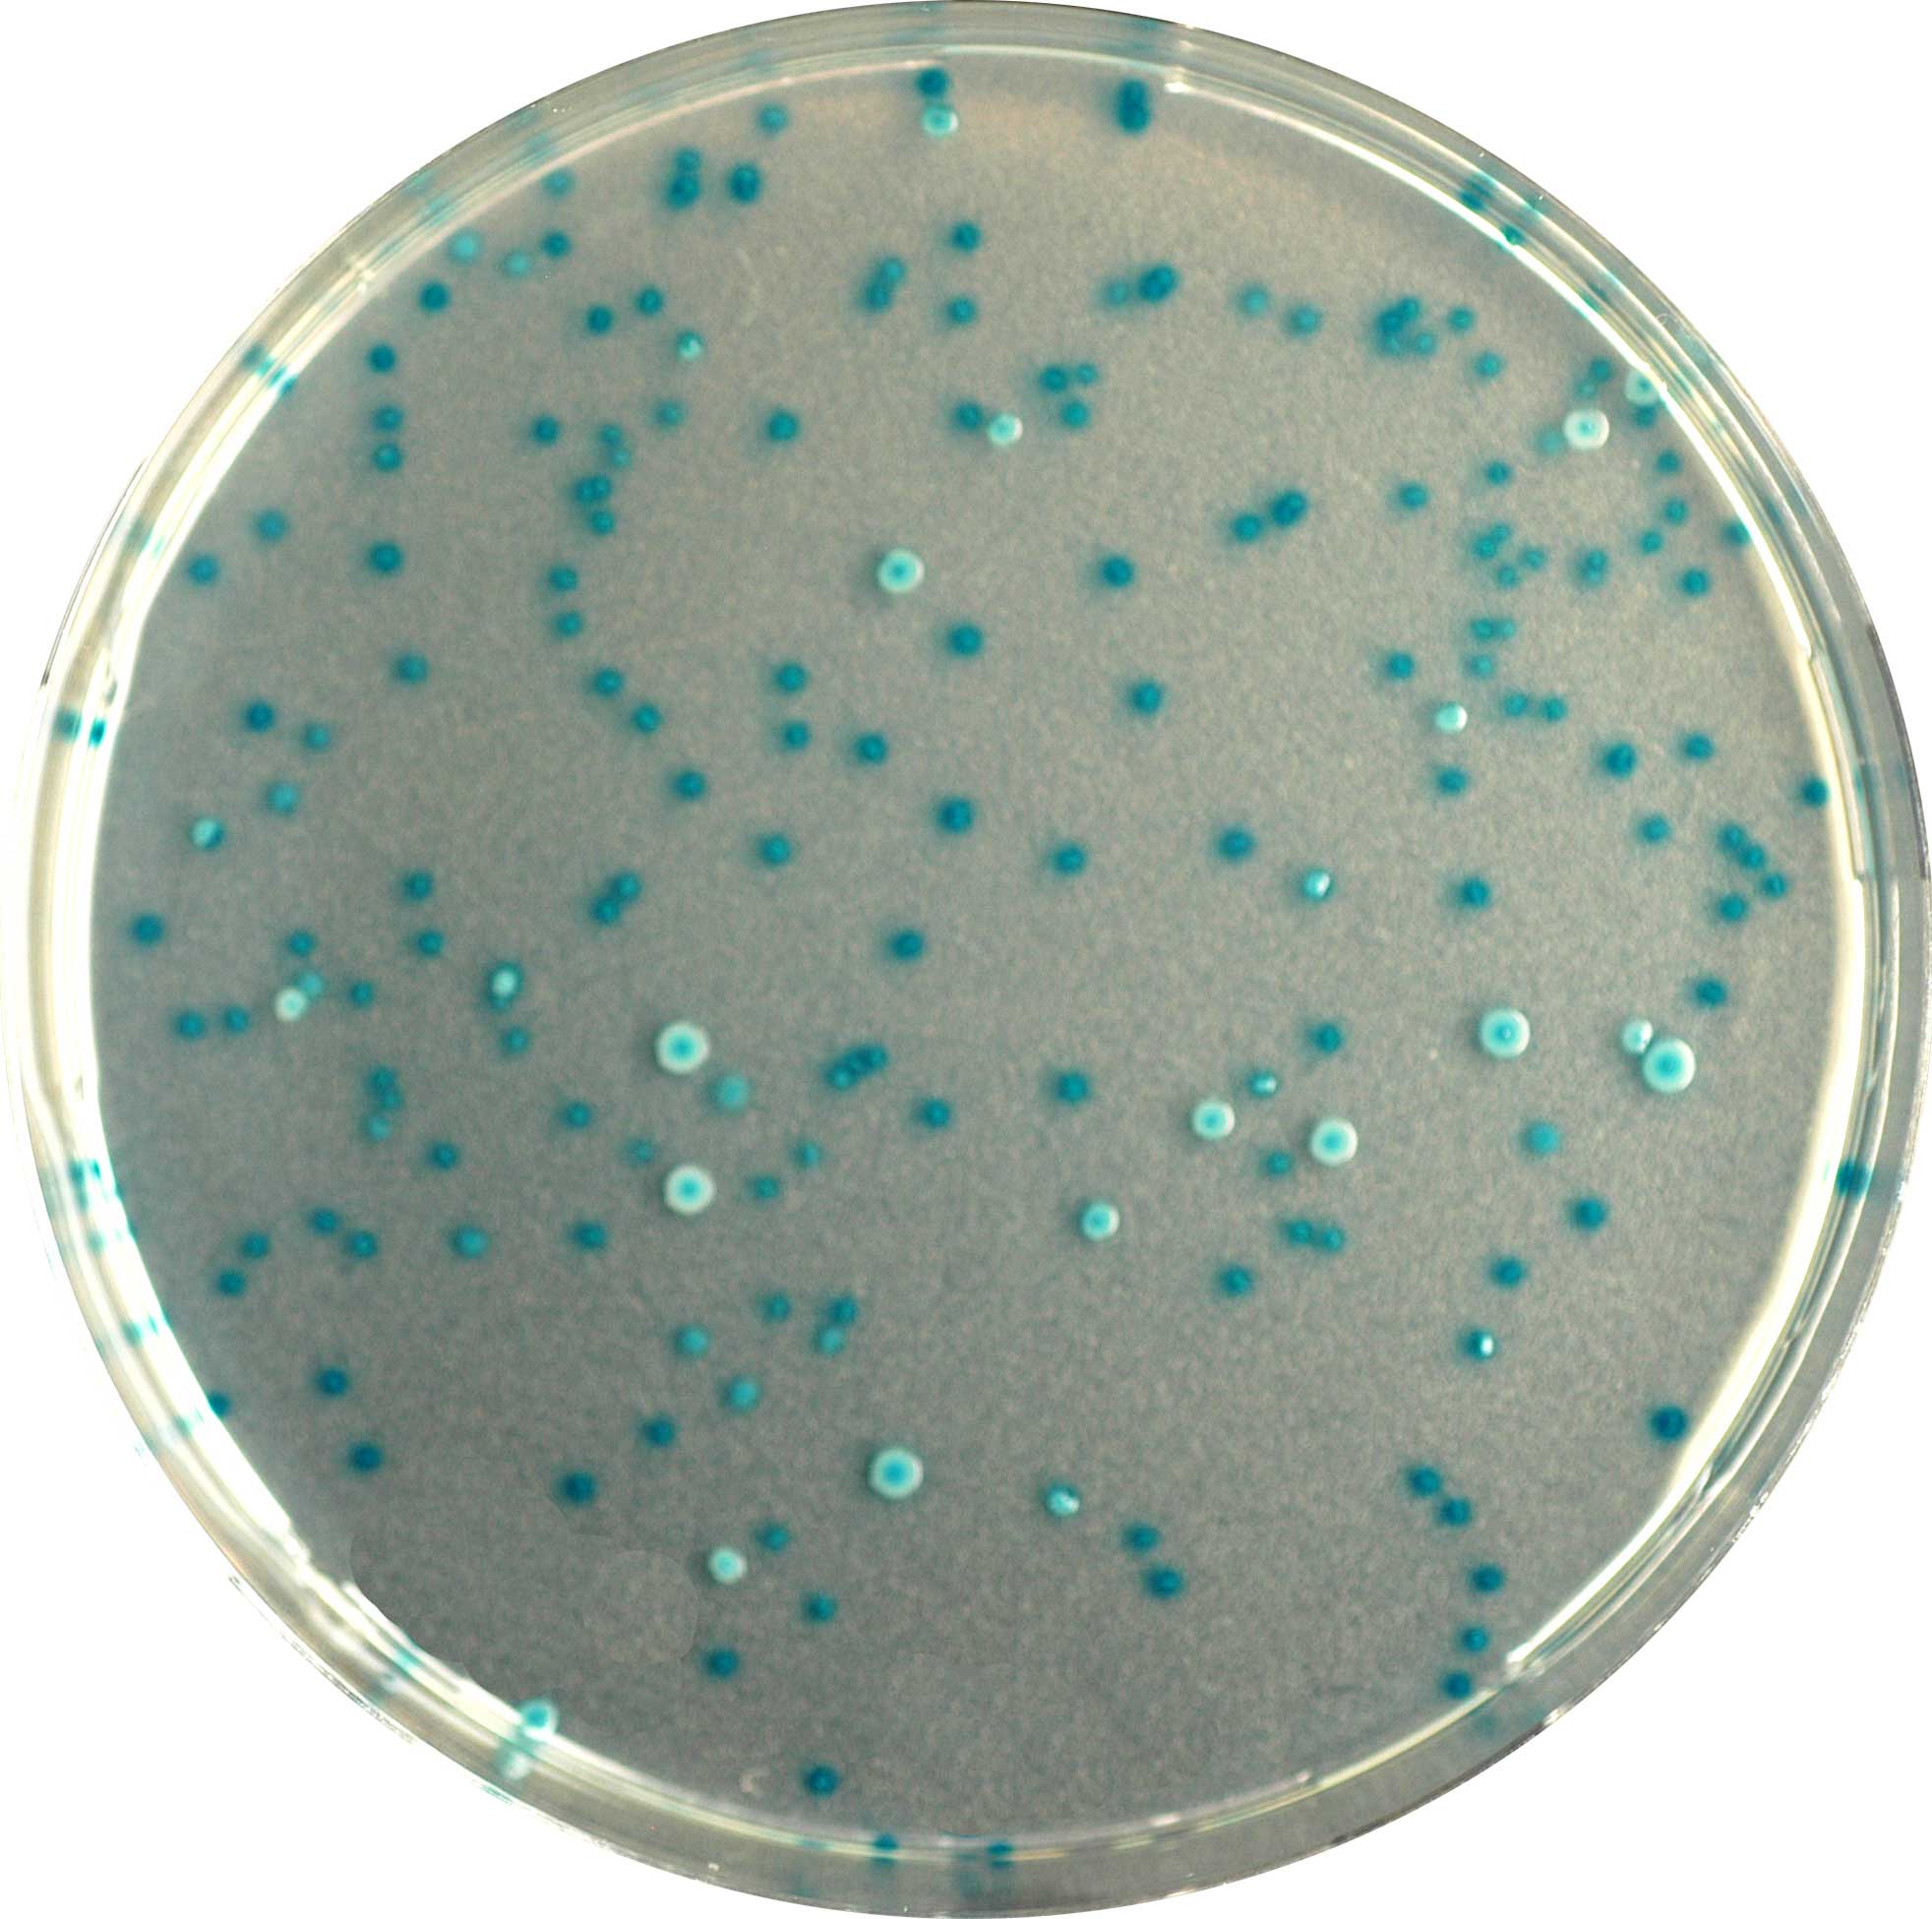 CHROMagar E. coli. Medio de cultivo cromogénico para la detección y recuento de E.coli.